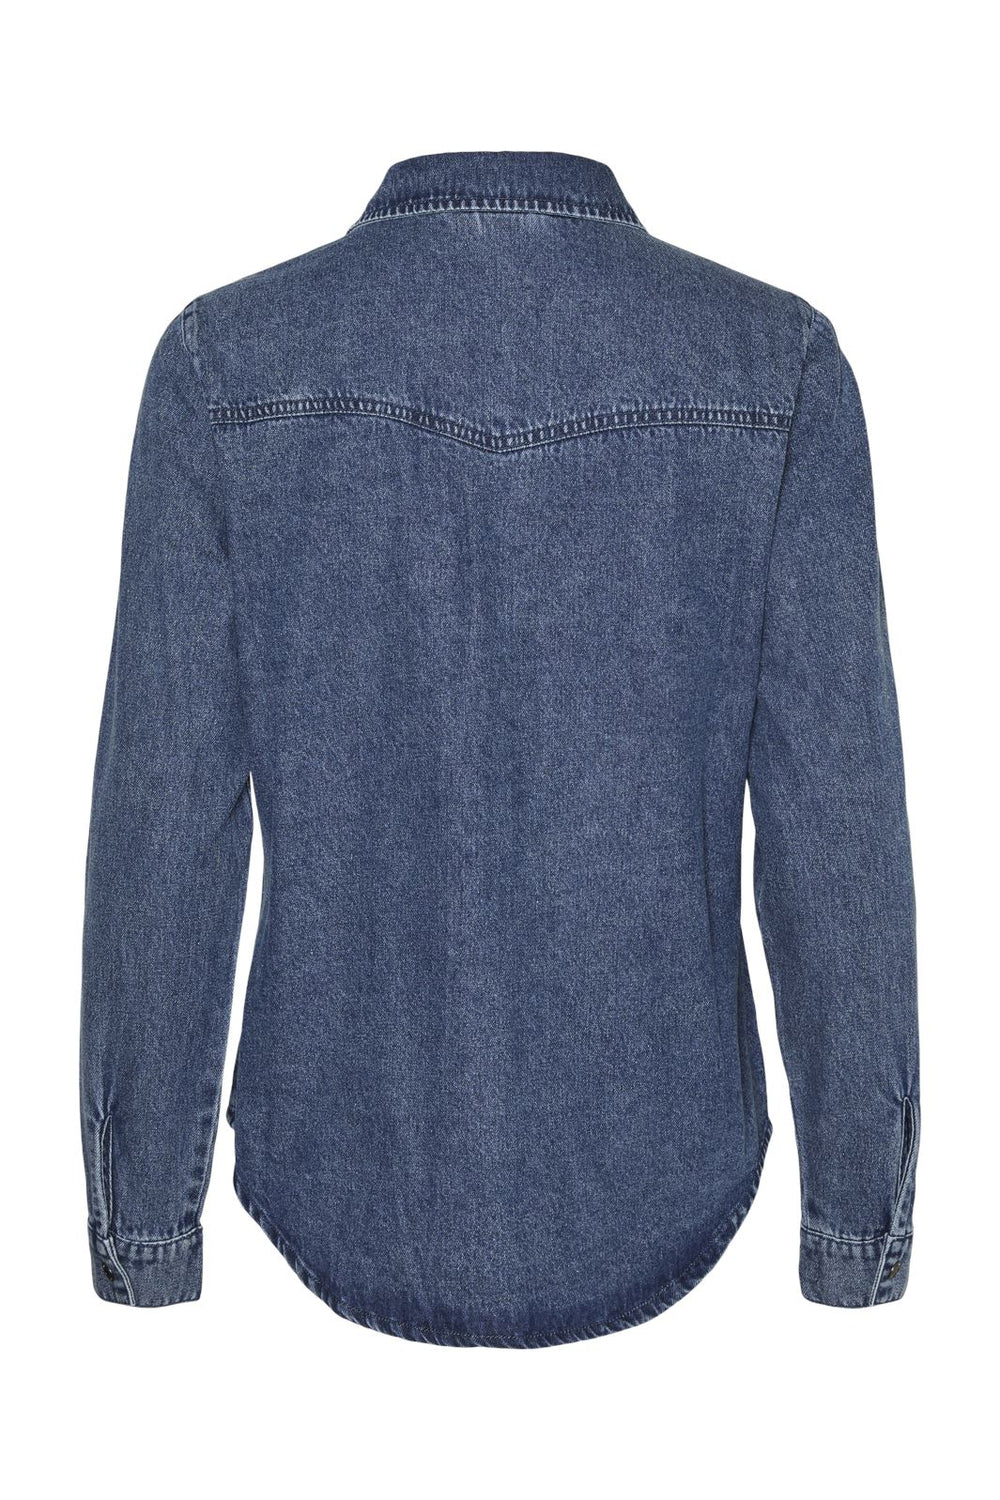 Vero Moda - Vmjennie Ls Denim Shirt Mix - 4555396 Medium Blue Denim